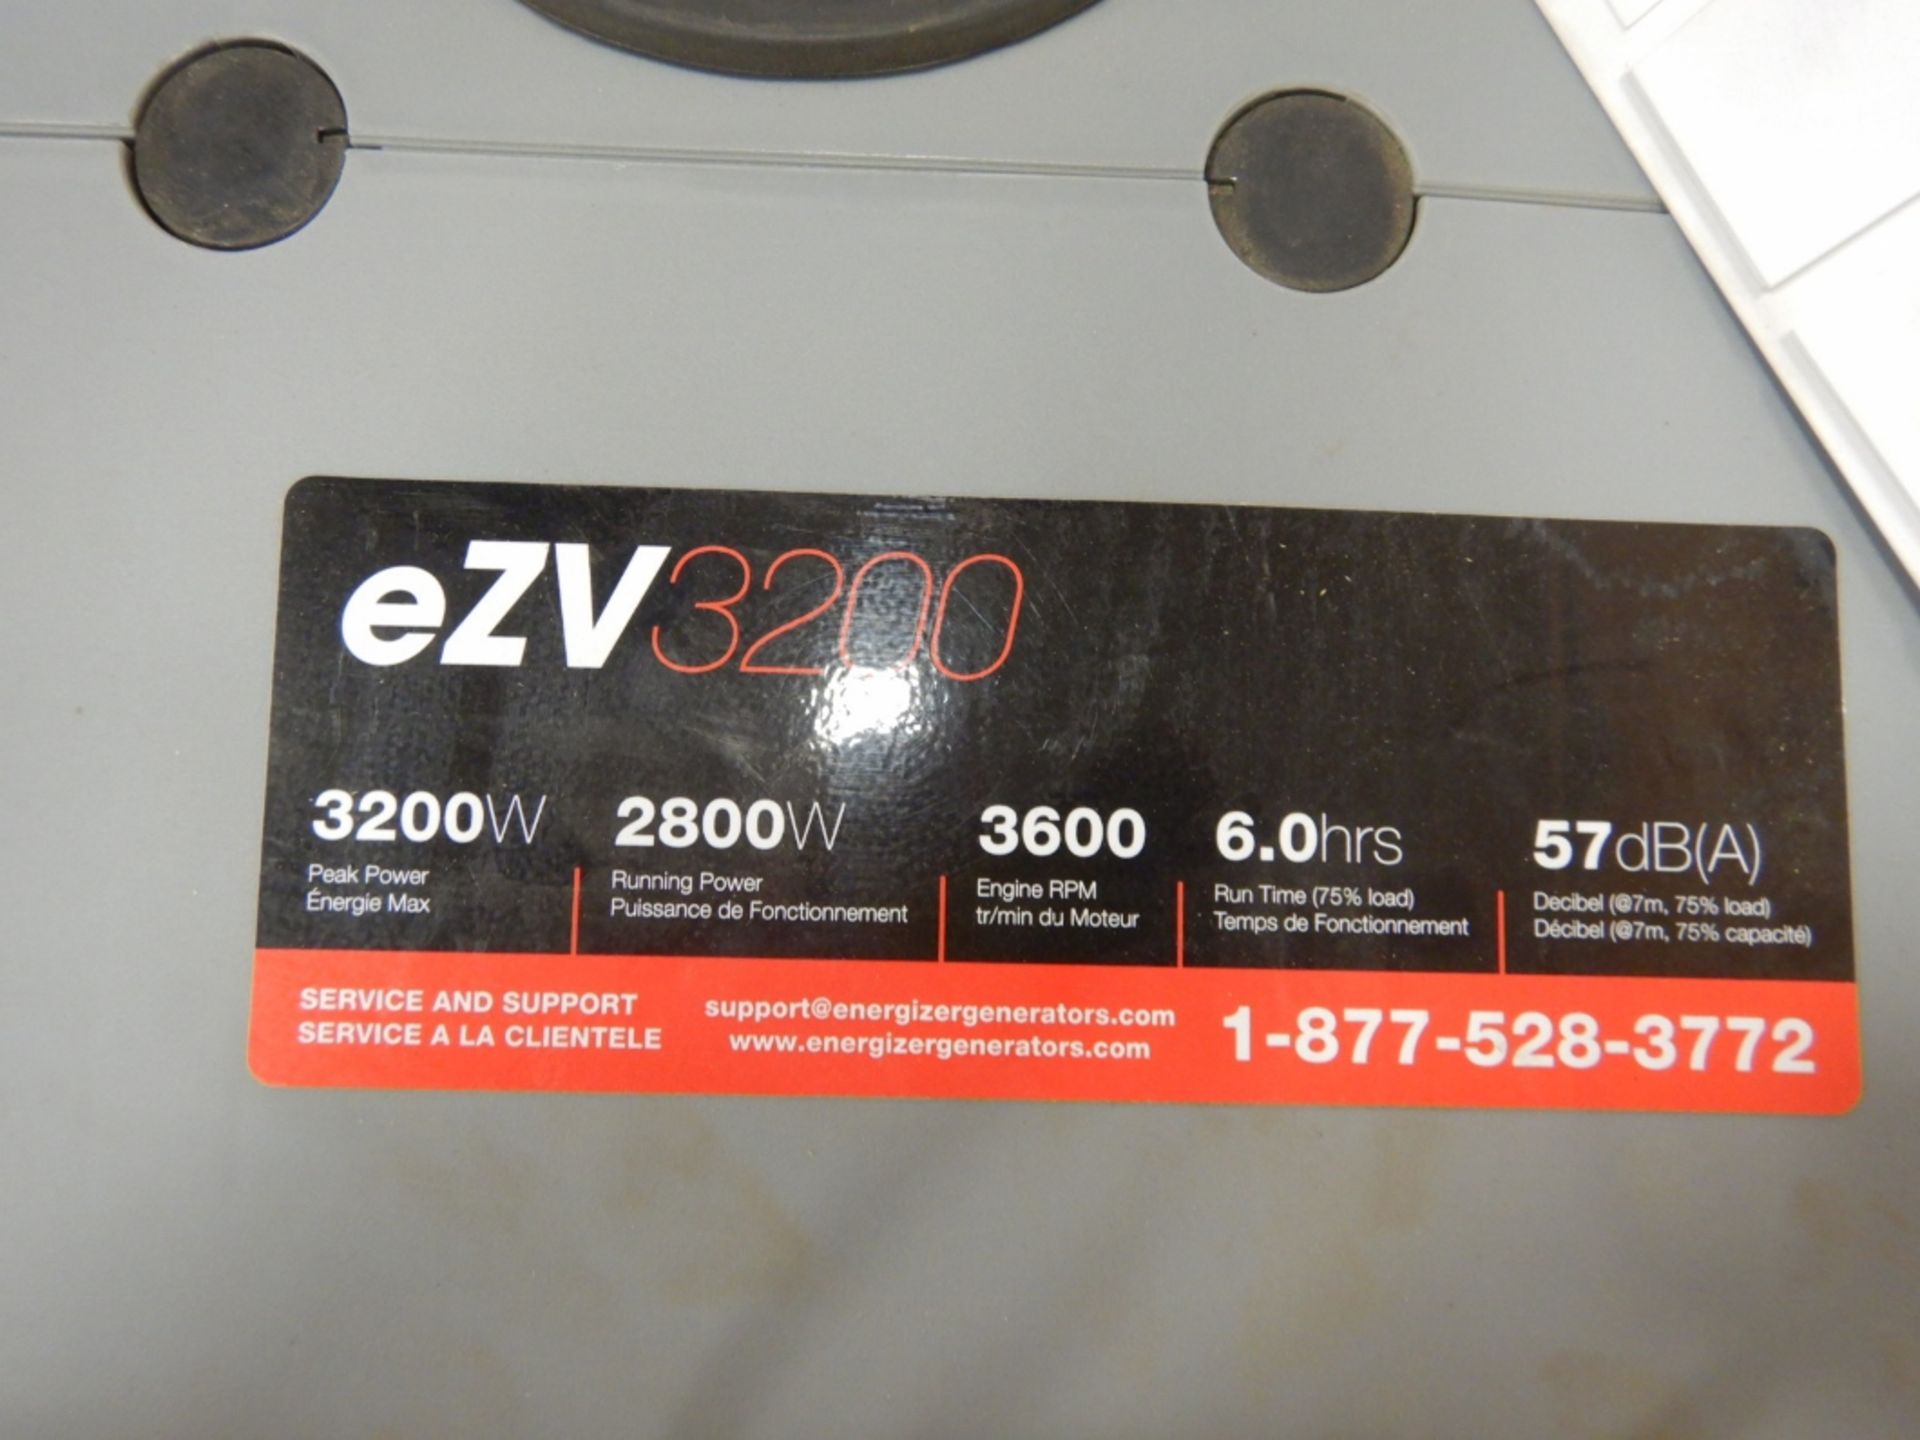 ENERGIZER eZB 3200 WATT GEN SET W/ WHEEL KIT - Image 4 of 4